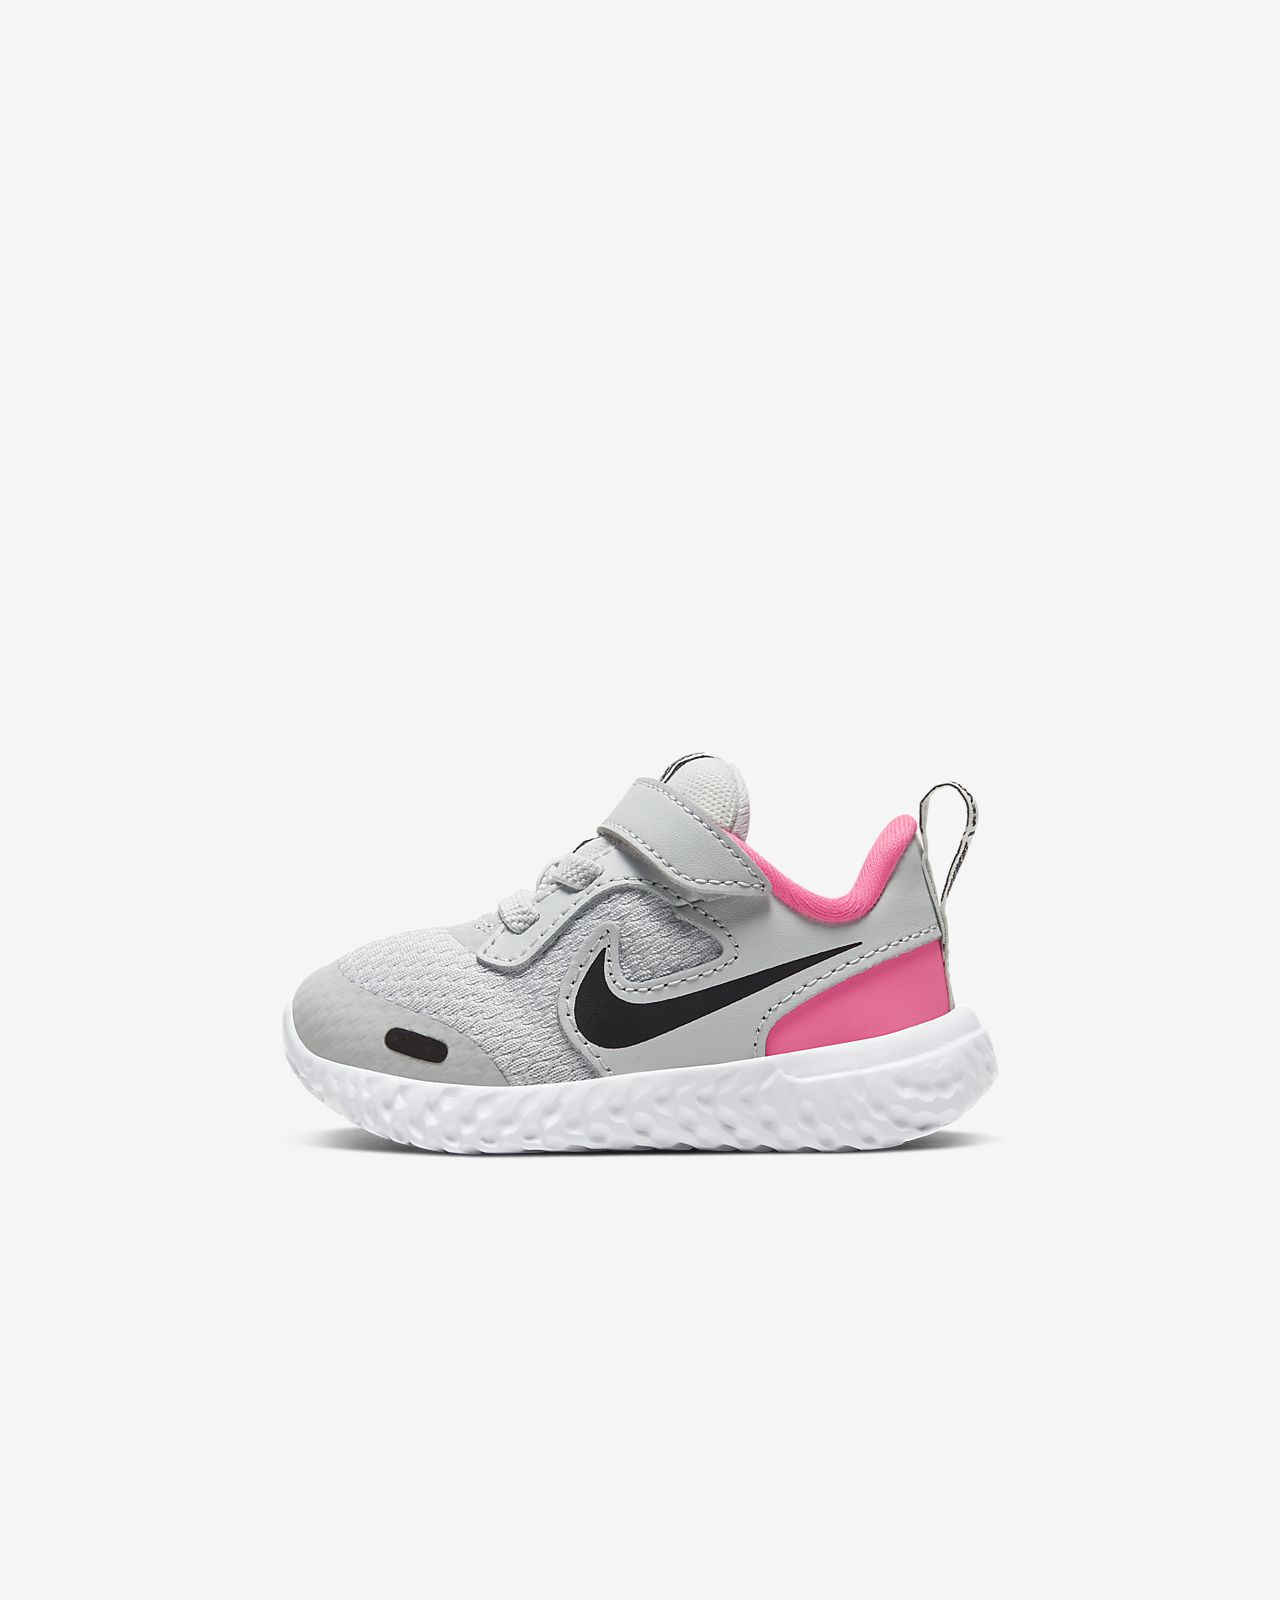 bebe pink shoes